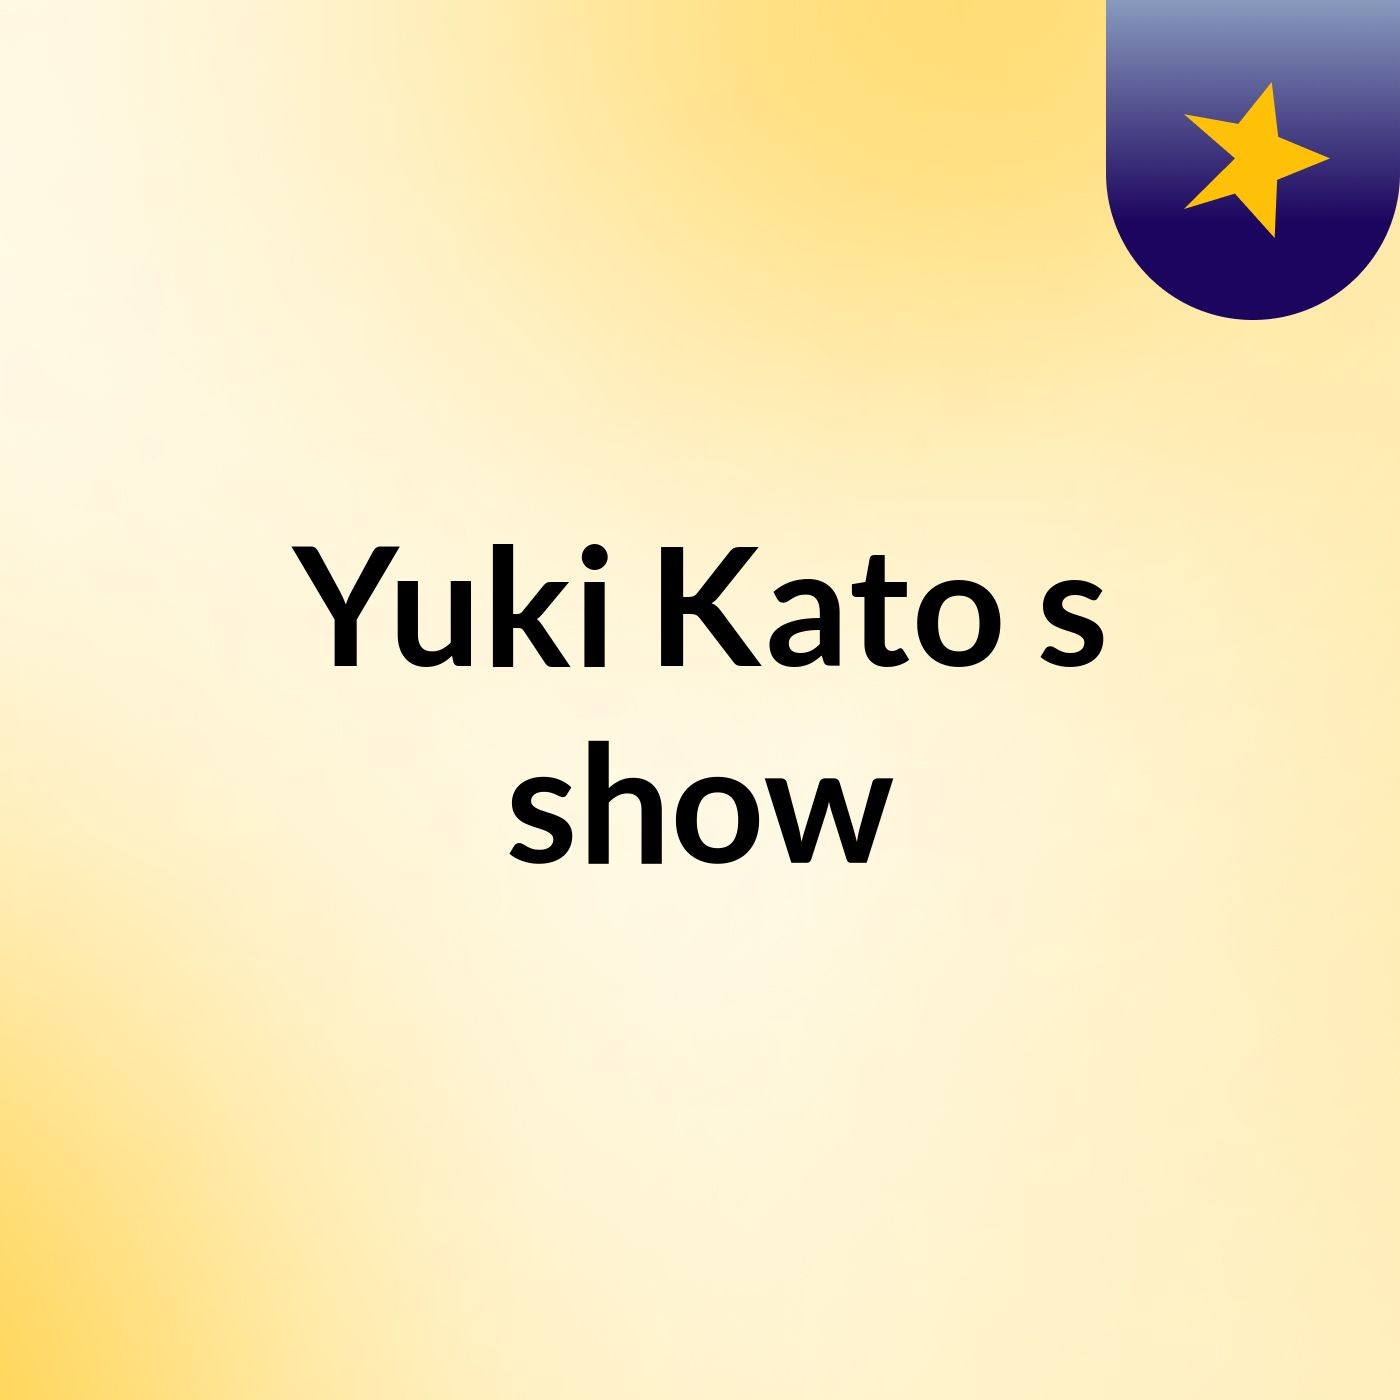 Yuki Kato's show